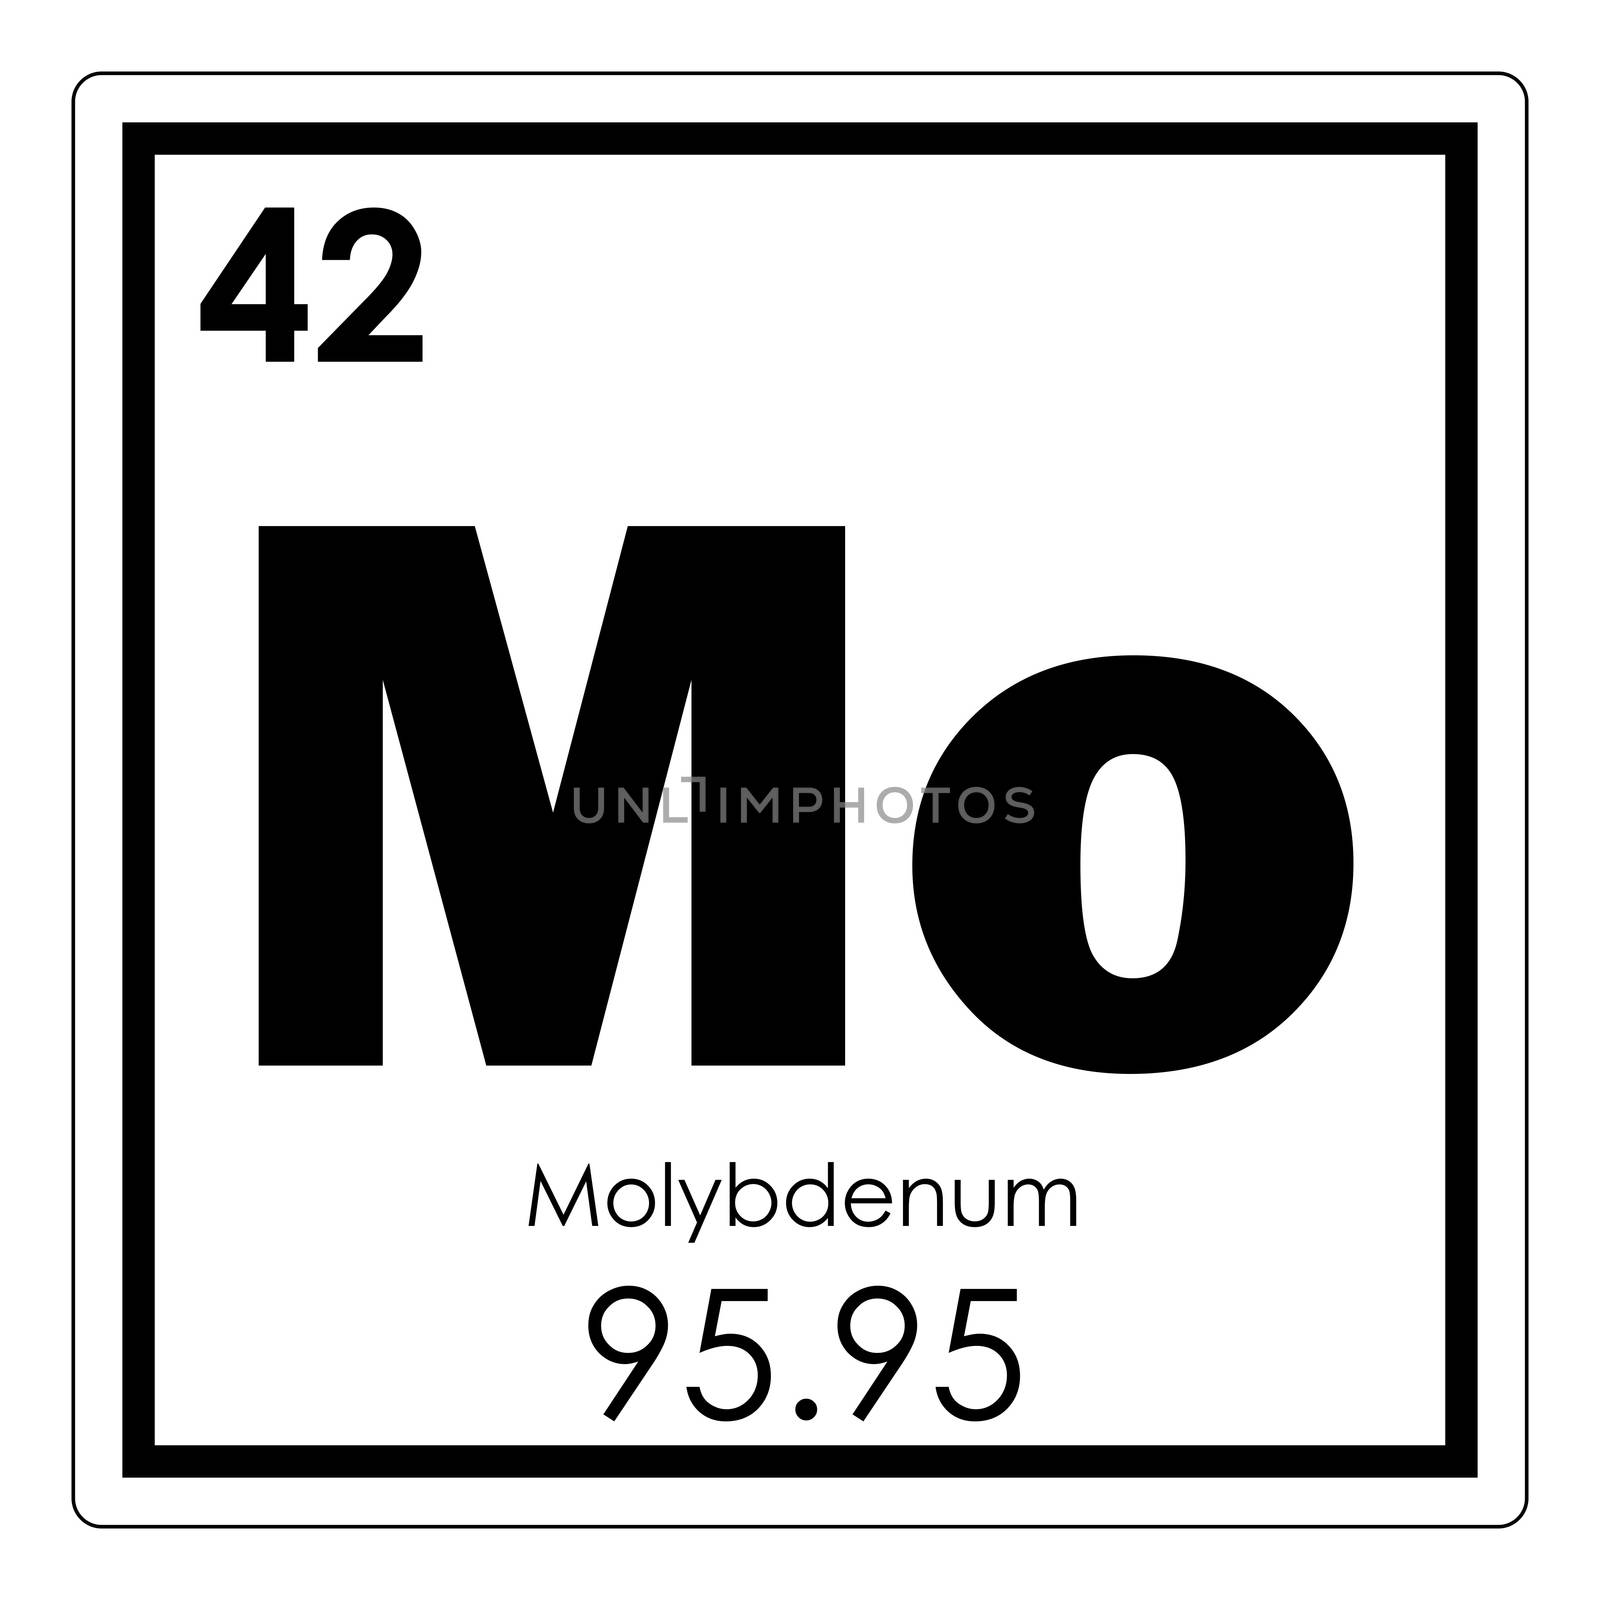 Molybdenum chemical element by tony4urban